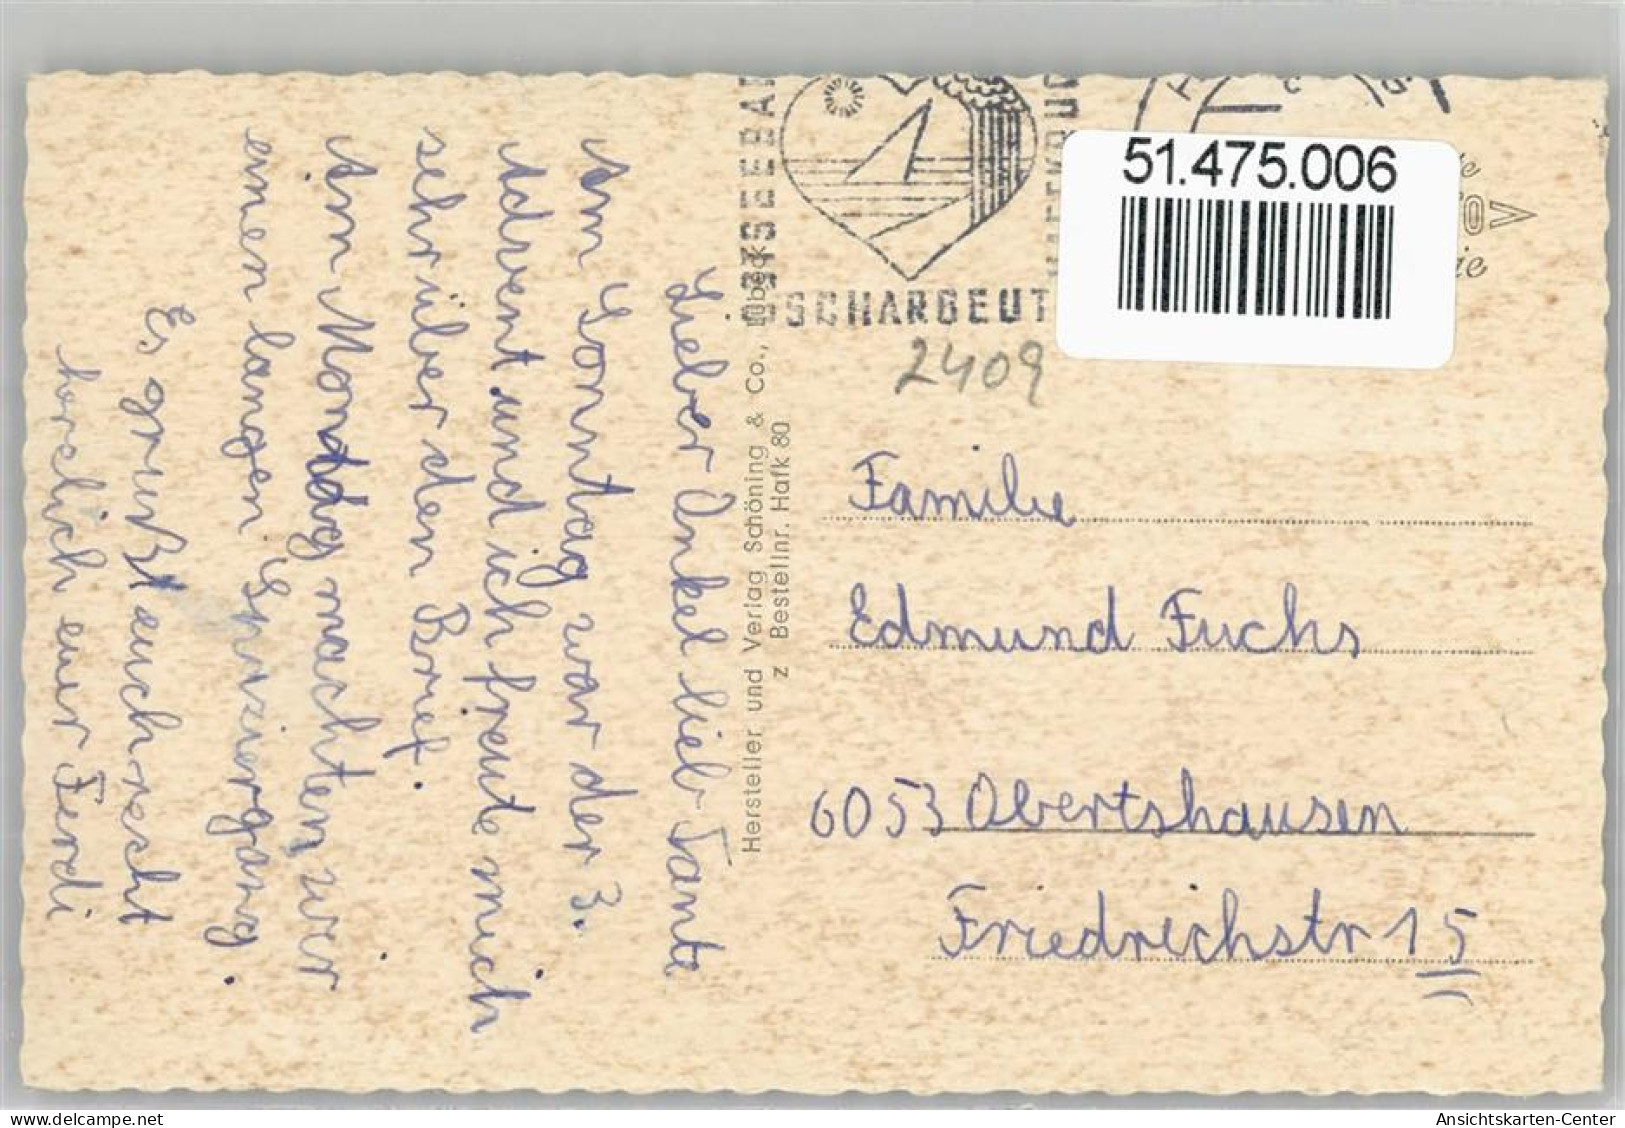 51475006 - Haffkrug - Scharbeutz